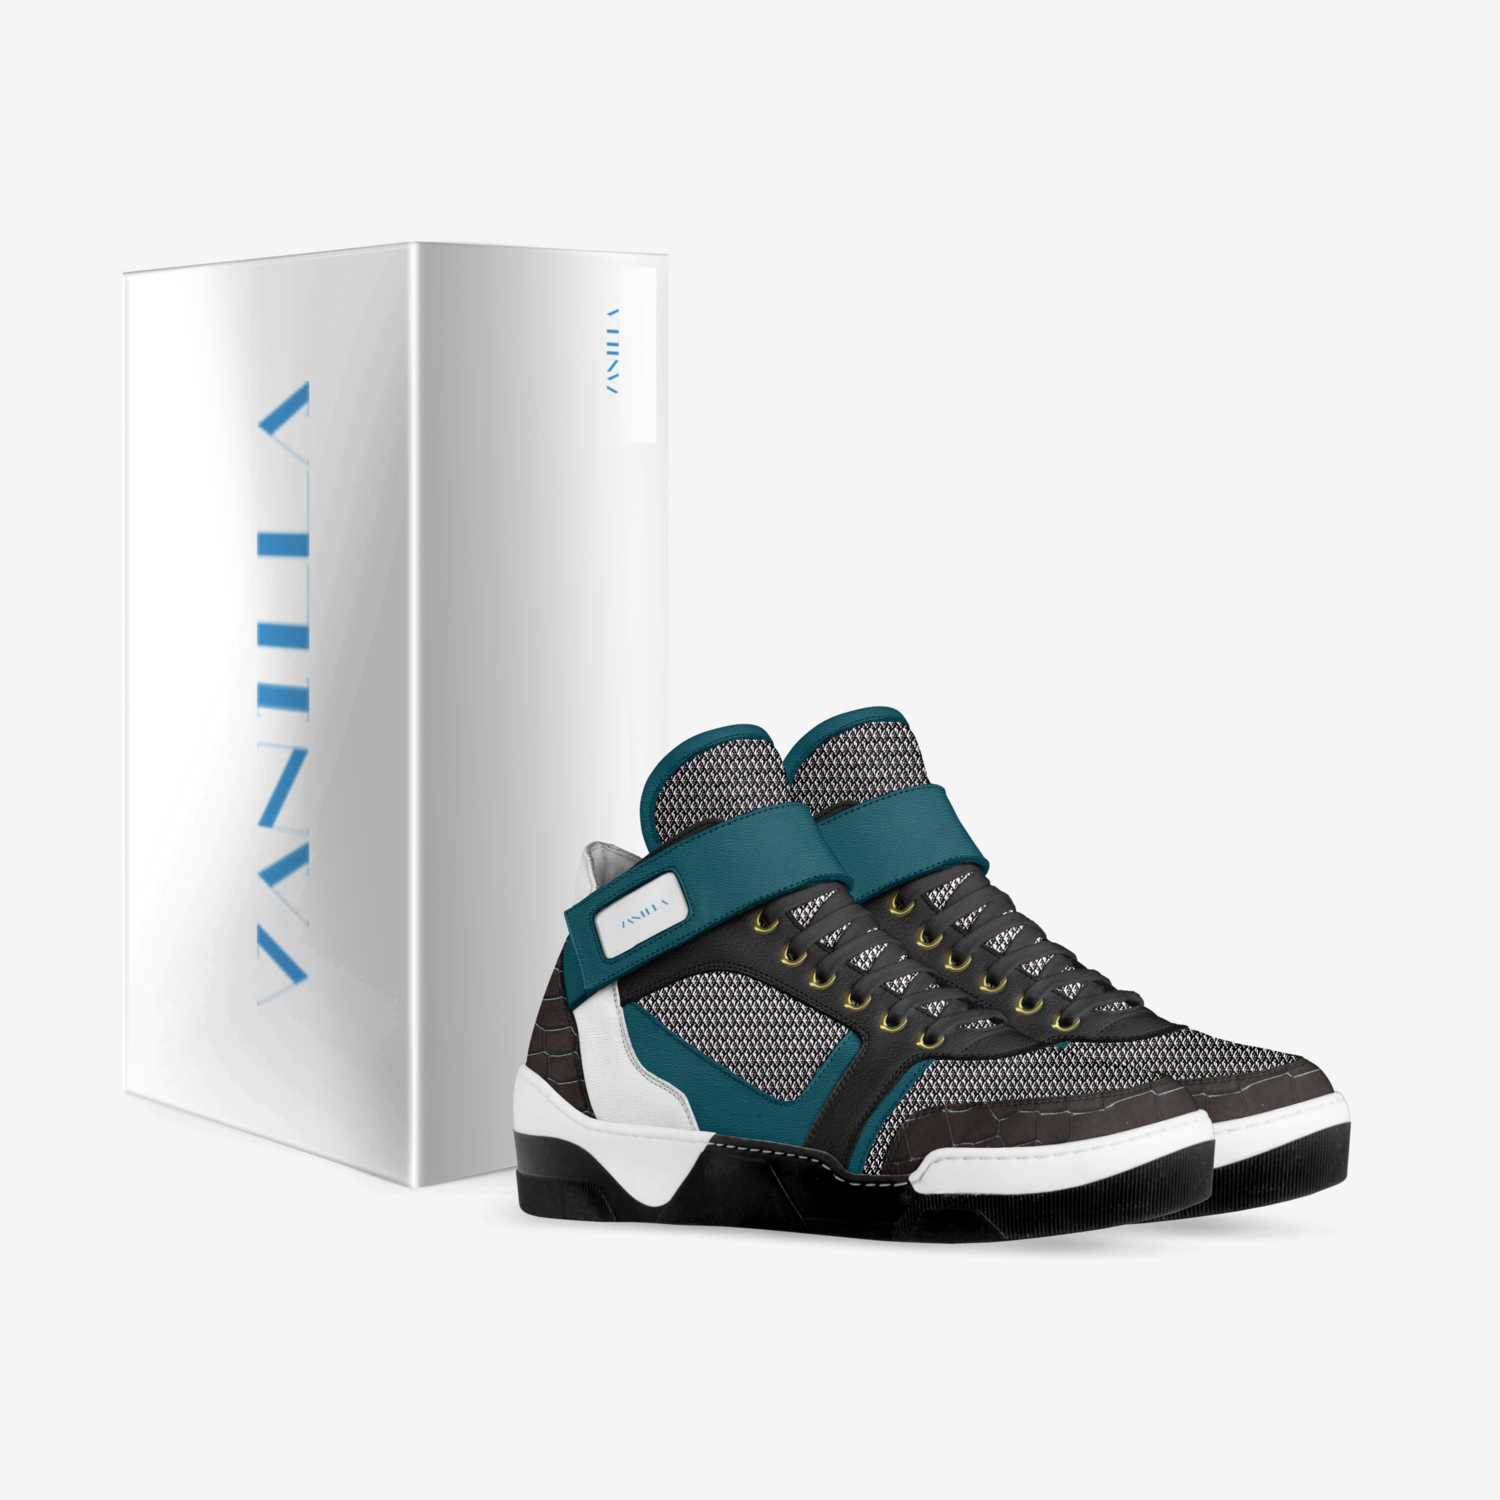 VAN1LLA custom made in Italy shoes by Hanis Imeraj | Box view